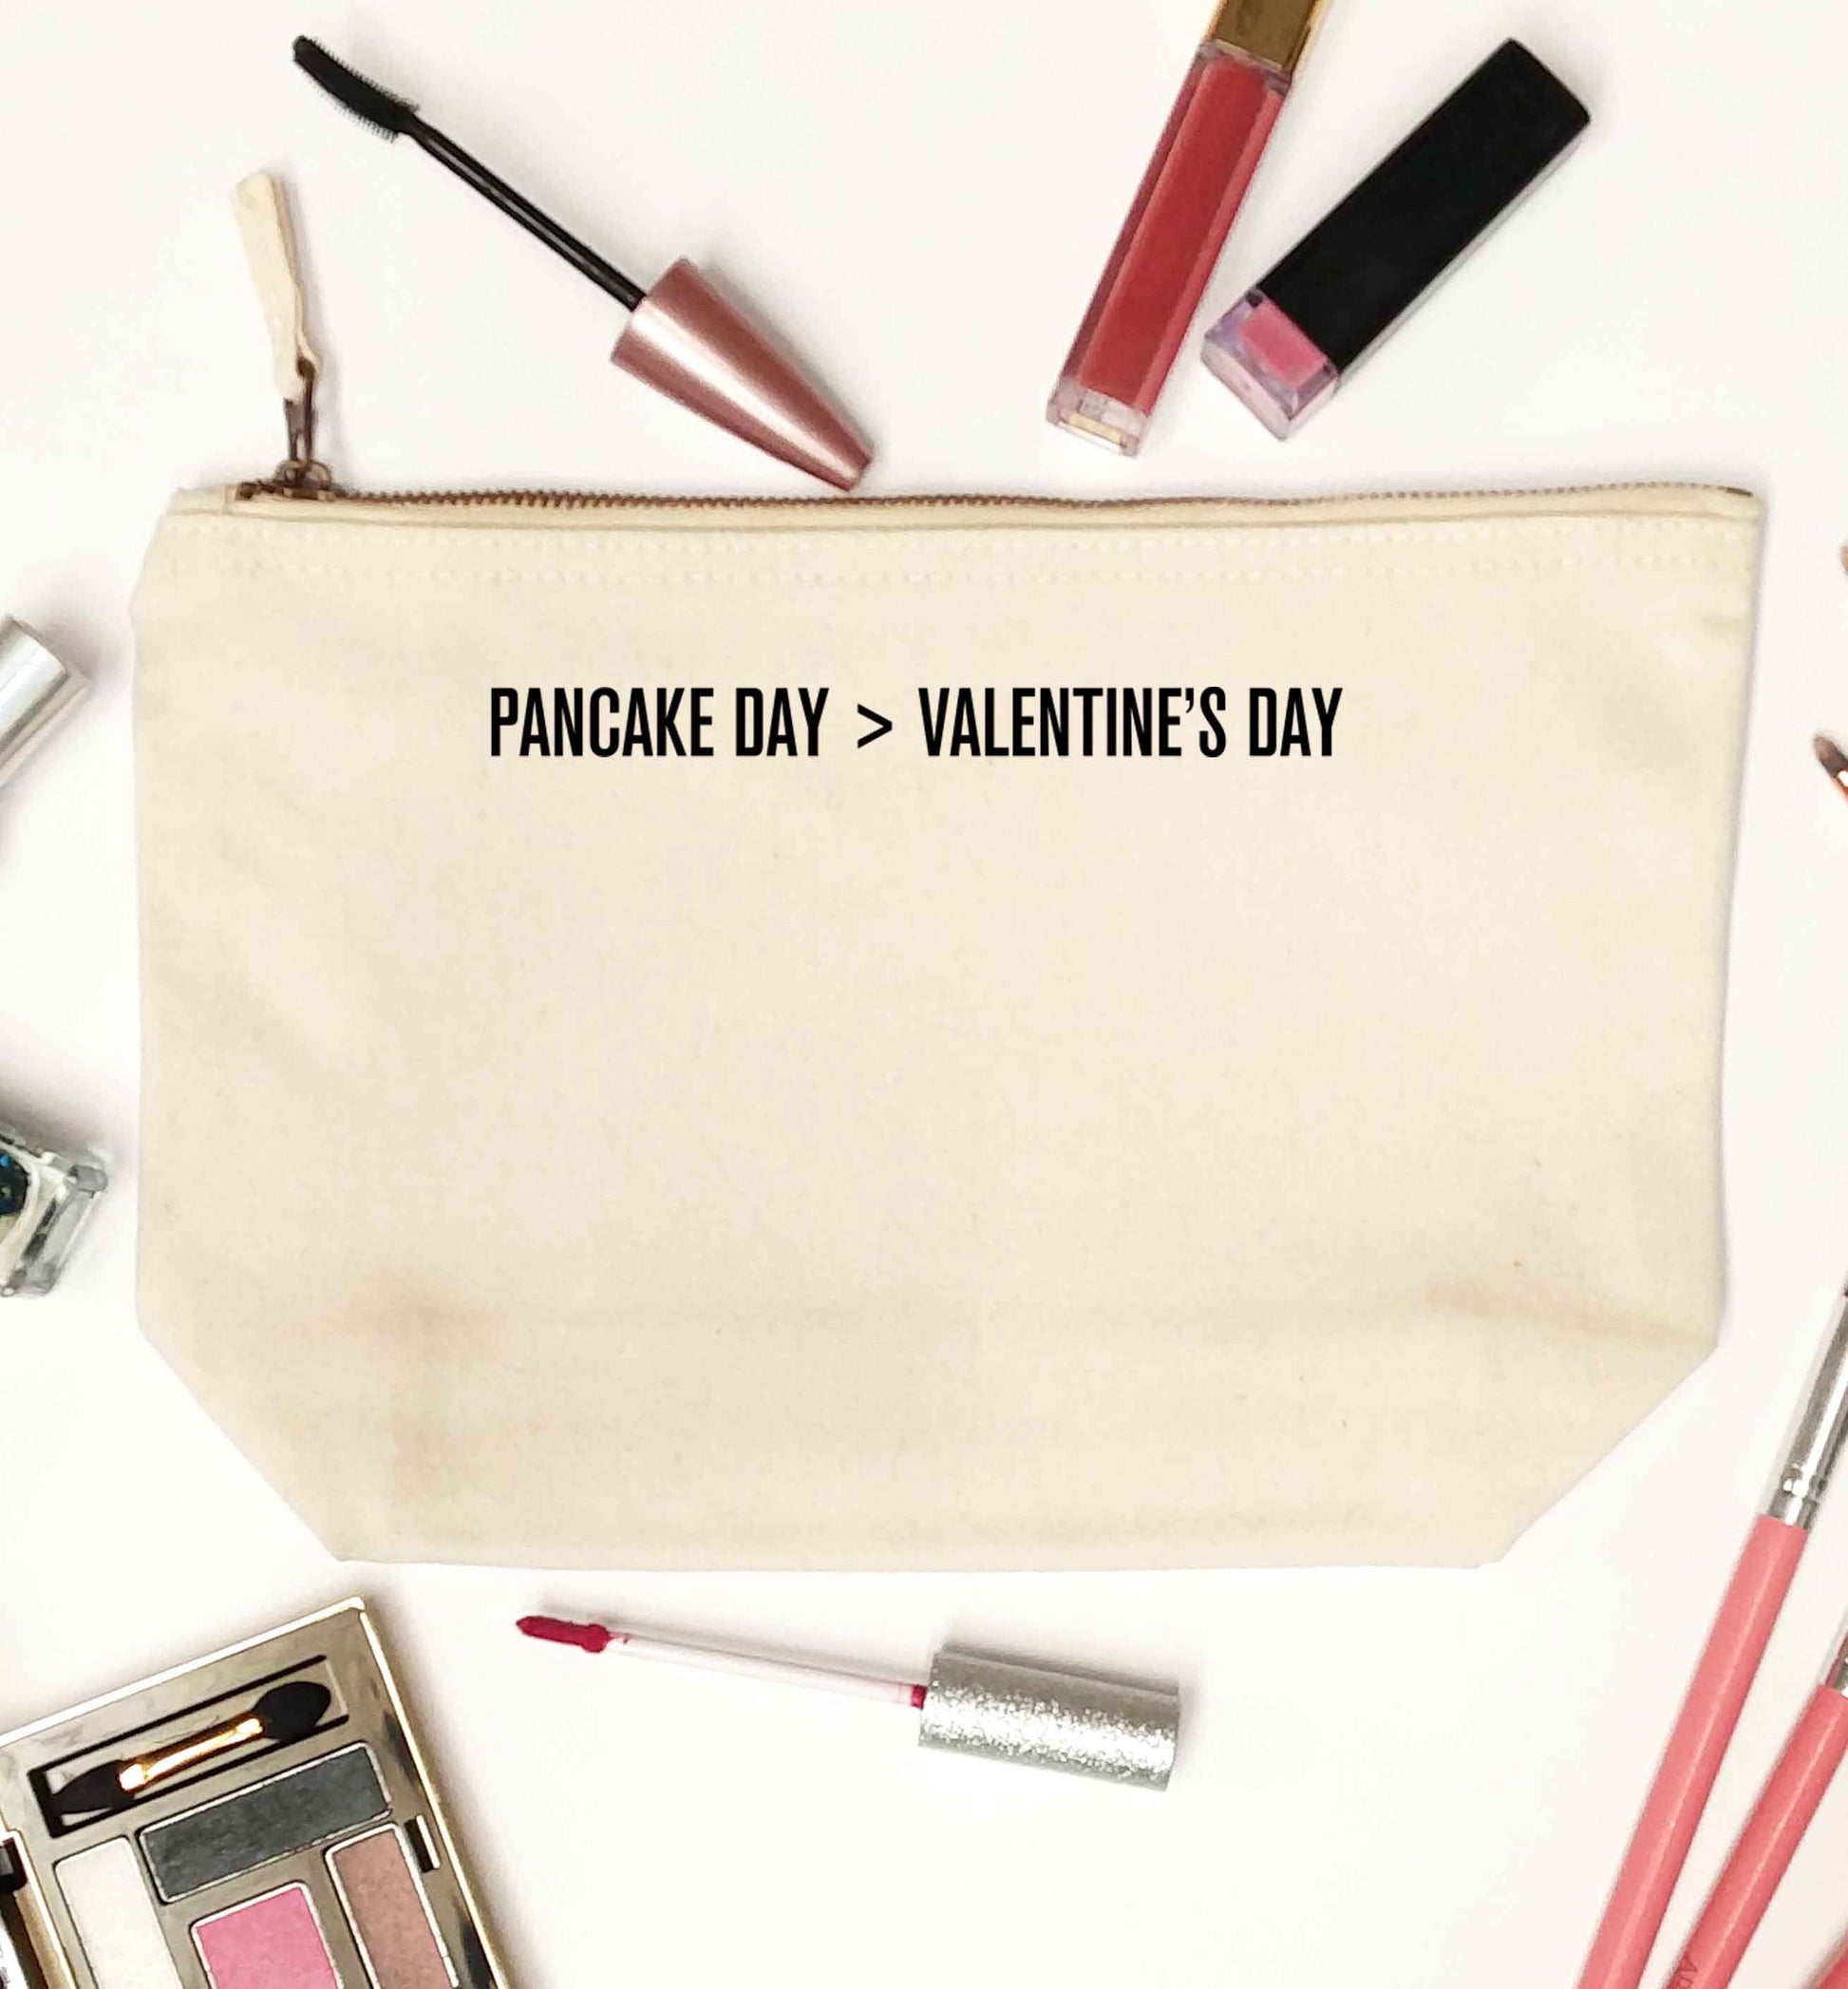 Pancake day > valentines day natural makeup bag